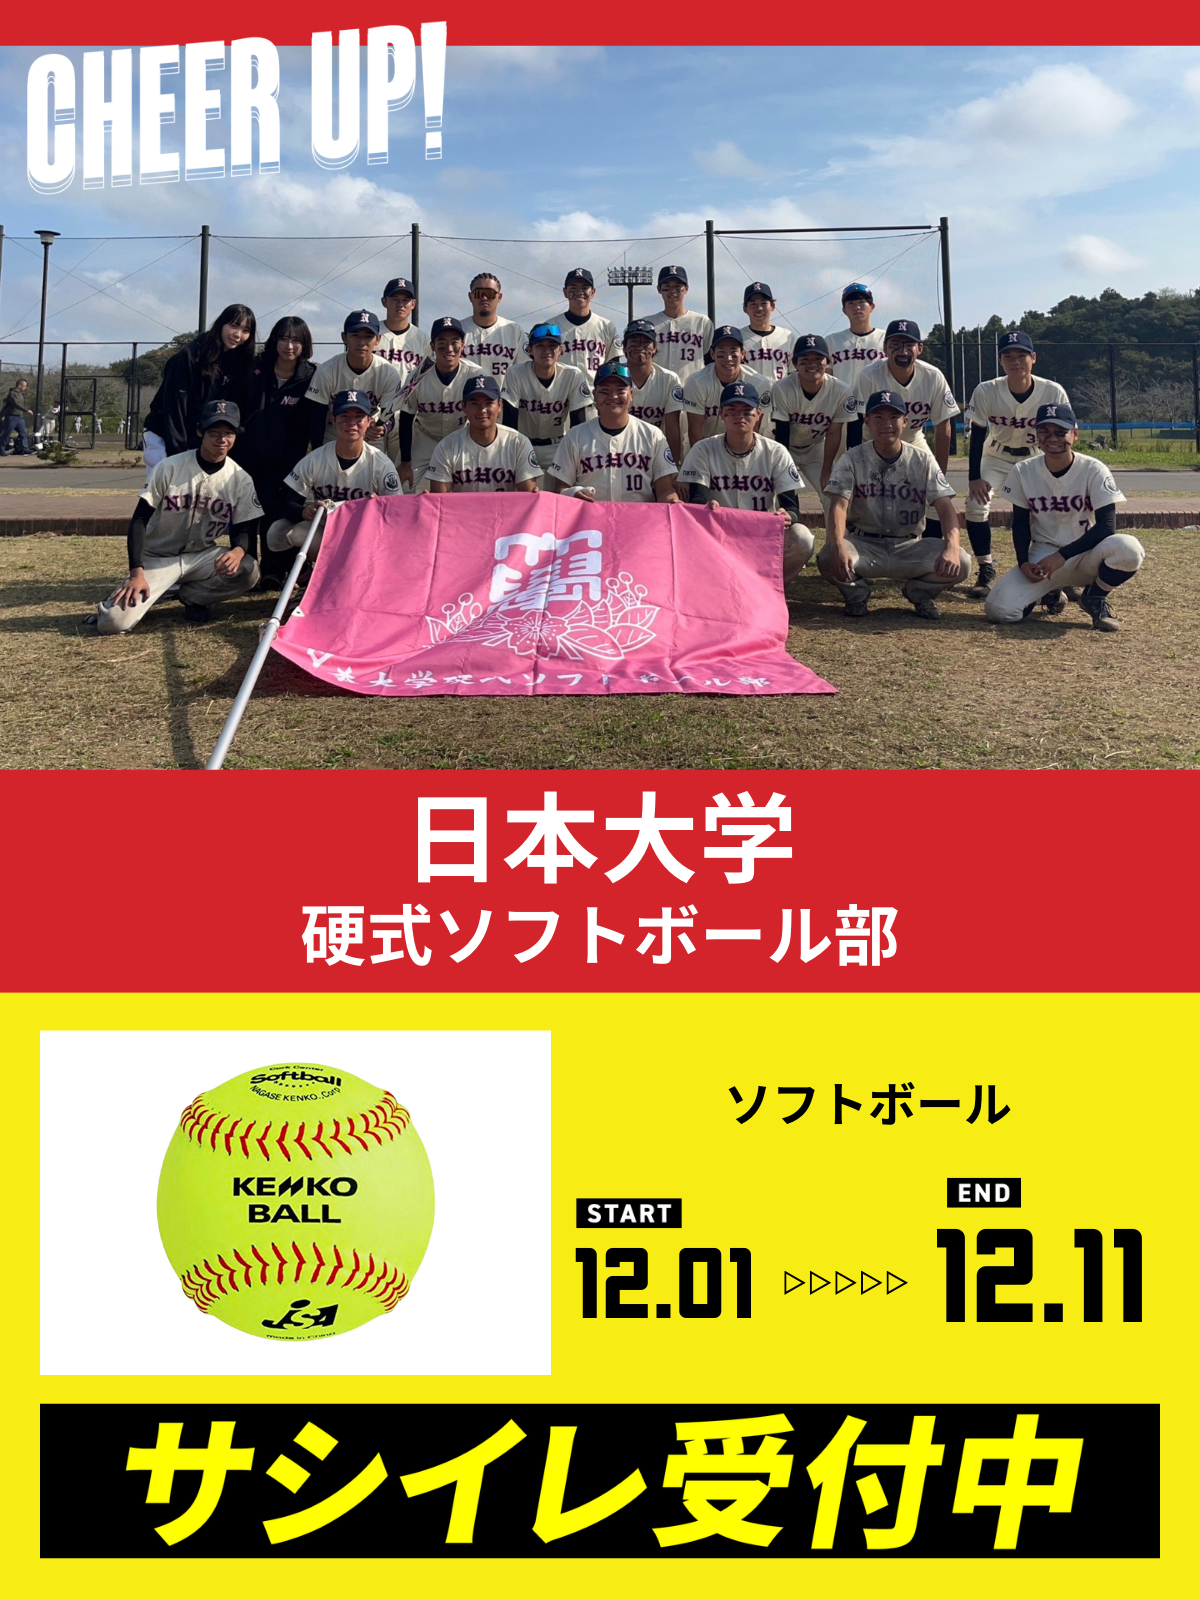 CHEER UP! for 日本大学 硬式ソフトボール部